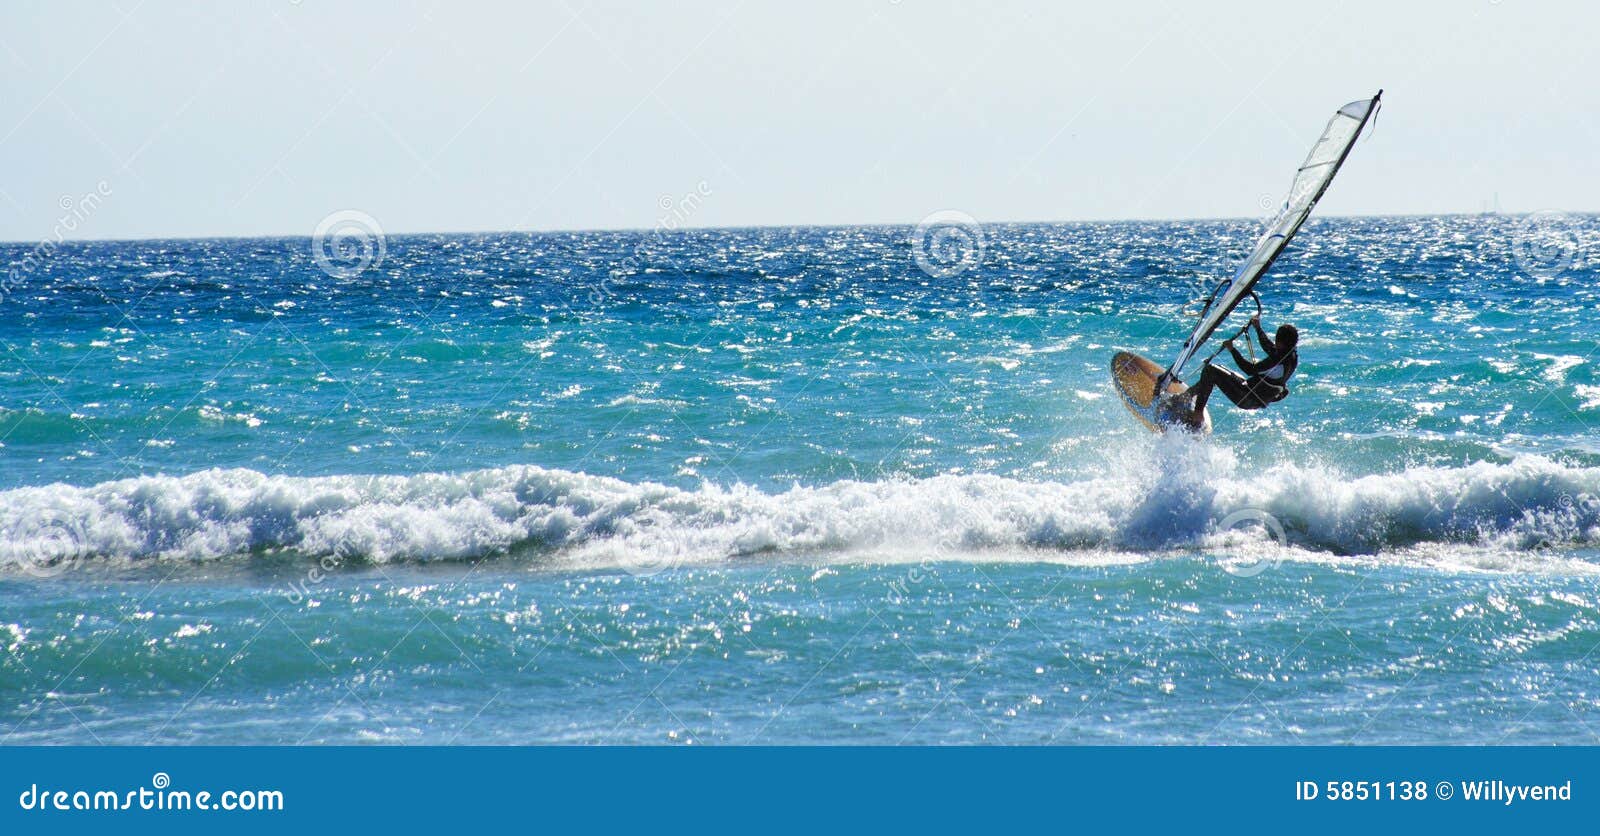 windsurf jump 2